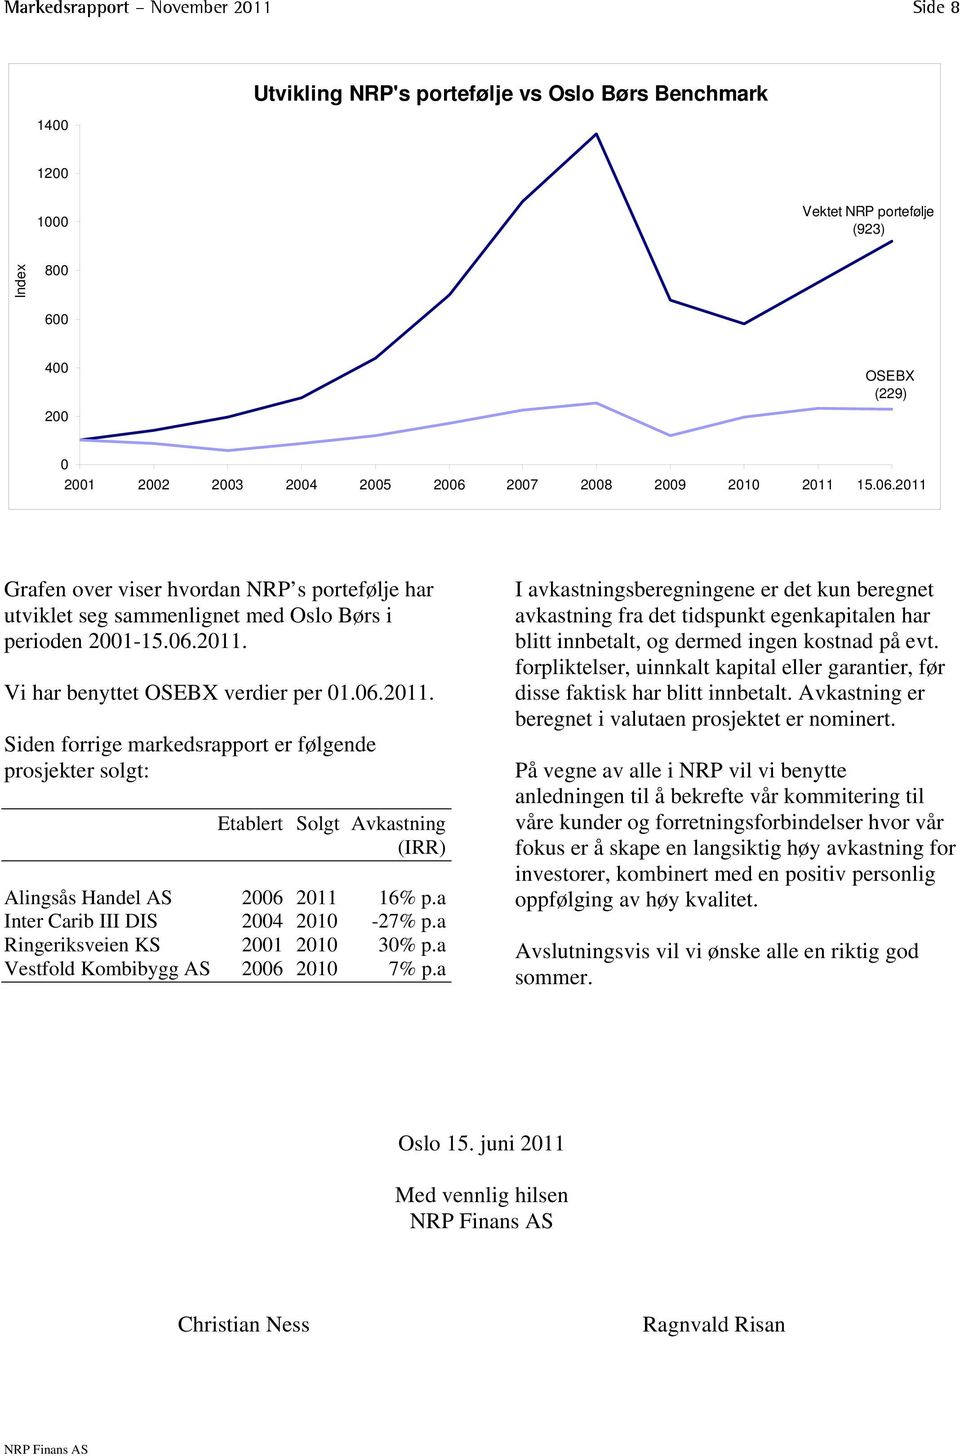 a Inter Carib III DIS 2004 2010-27% p.a Ringeriksveien KS 2001 2010 30% p.a Vestfold Kombibygg AS 2006 2010 7% p.